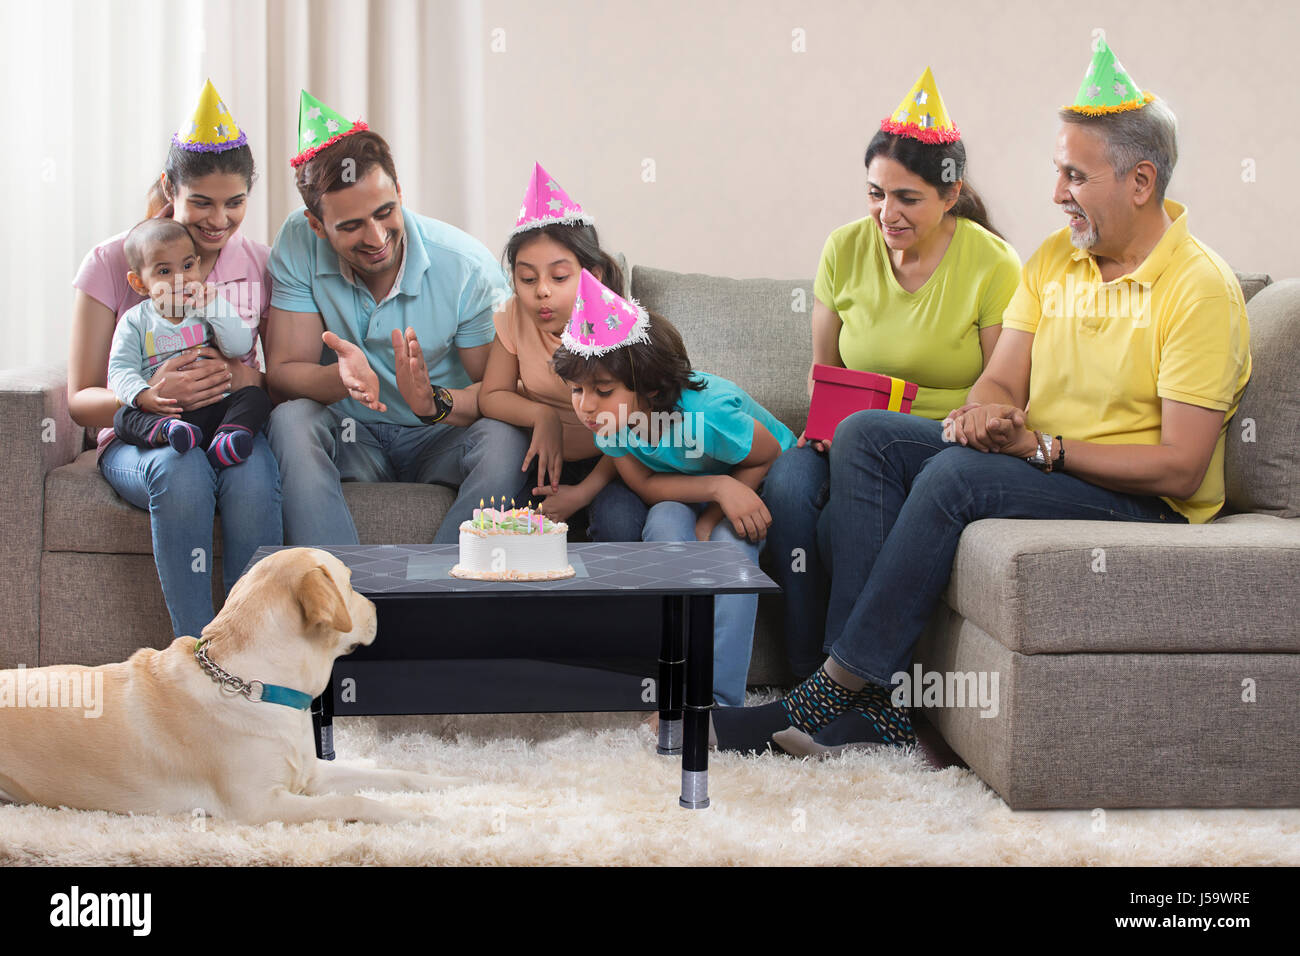 Multi-generation family with dog celebrating birthday party Stock Photo